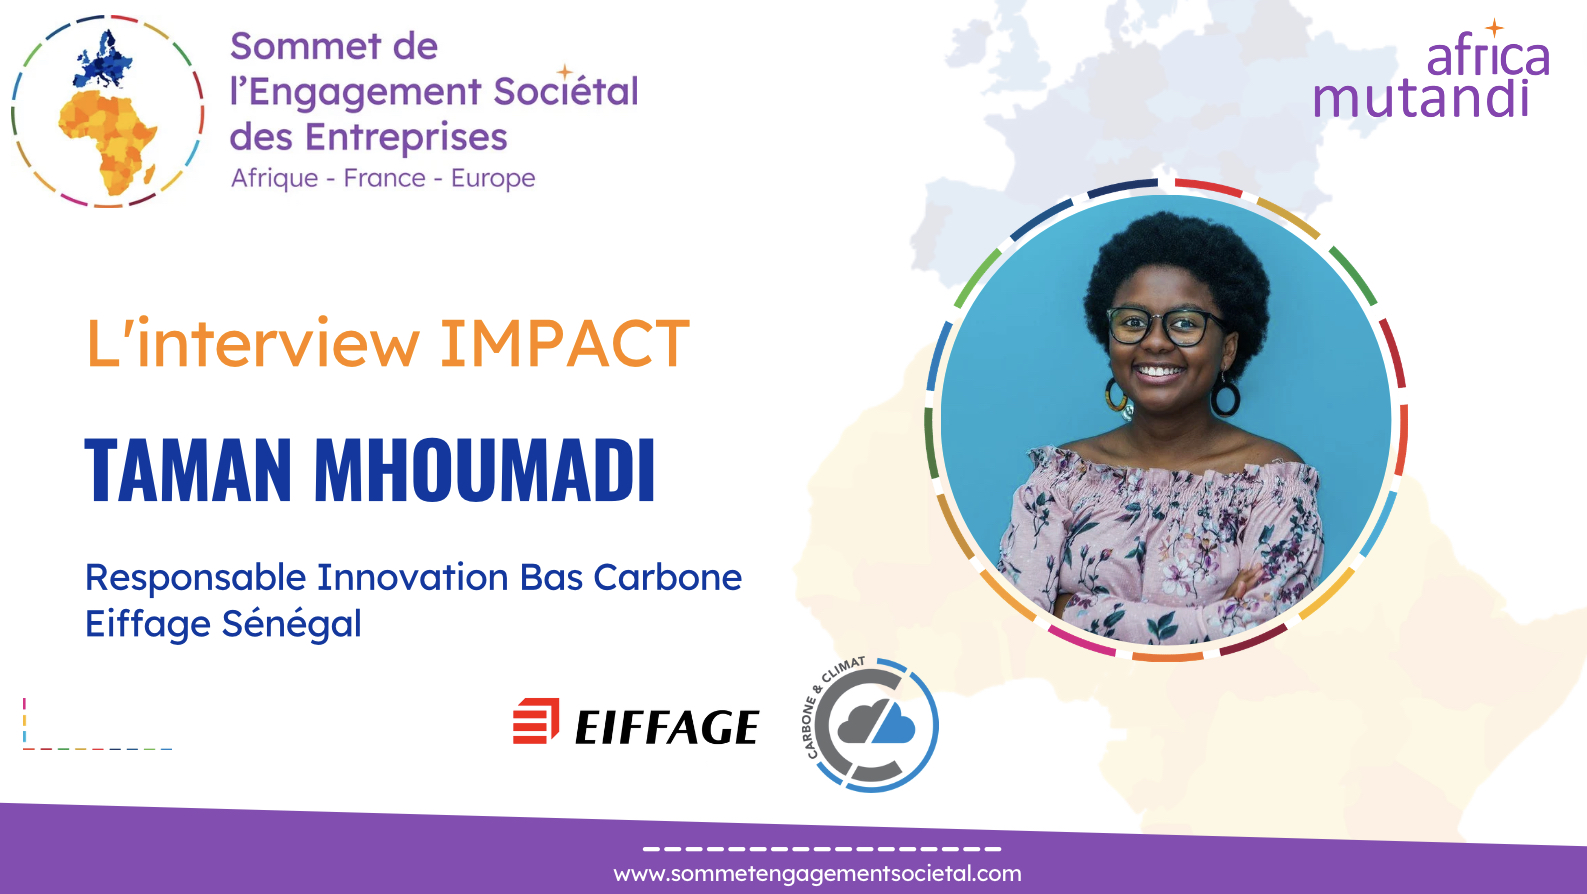 L’interview IMPACT de Taman Mhoumadi, Responsable Innovation Bas Carbone d’Eiffage Sénégal